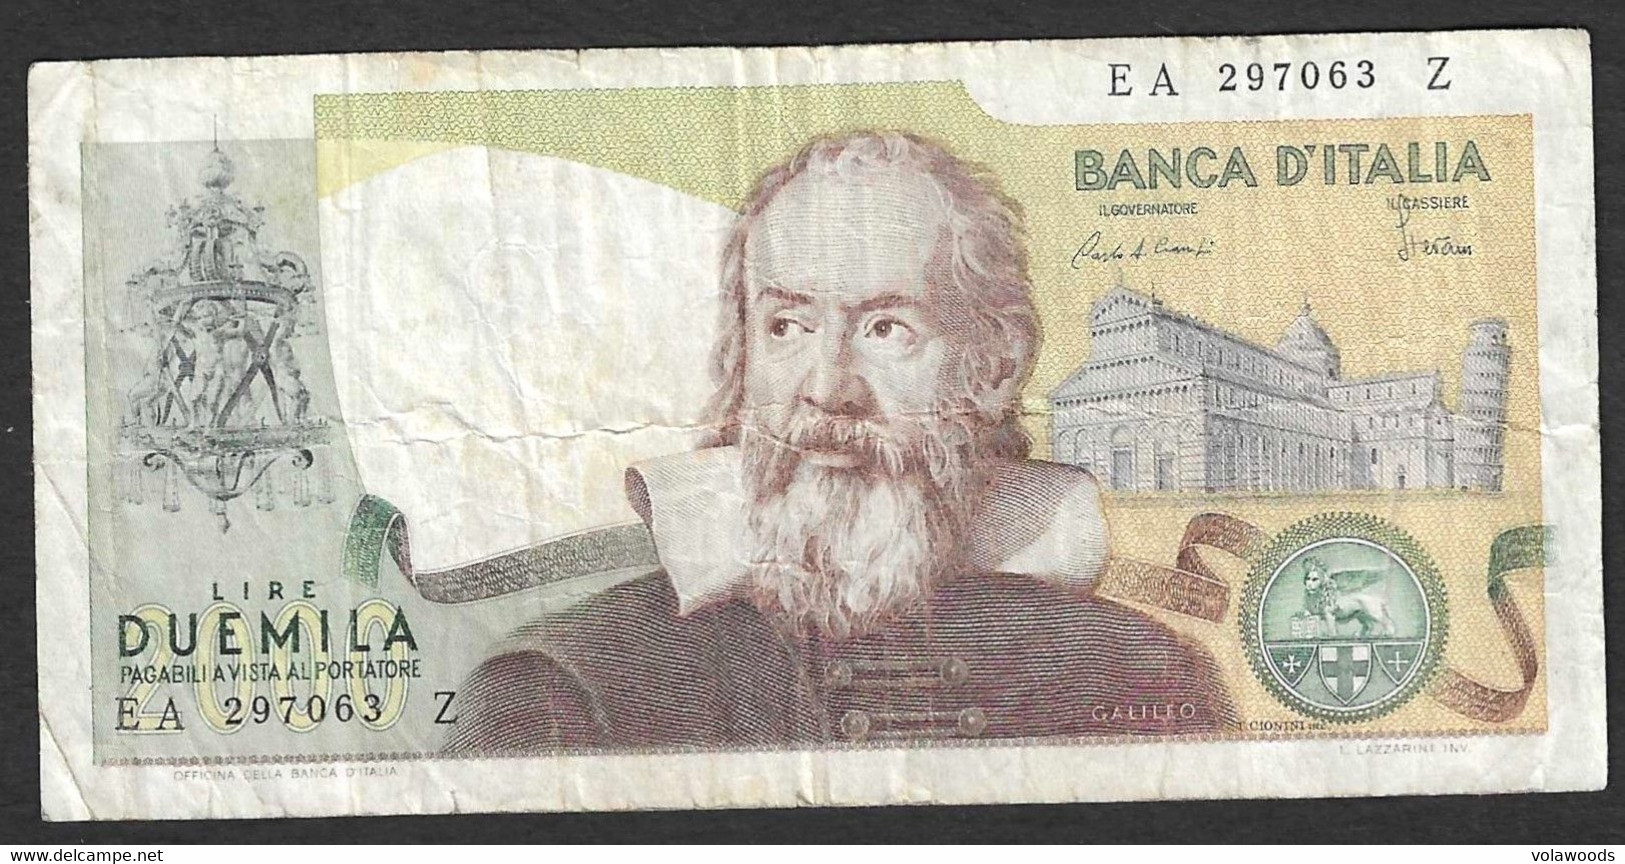 Italia - Banconota Circolata Da 2.000 Lire "Galileo" P-103c - 1983 #19 - 2000 Lire